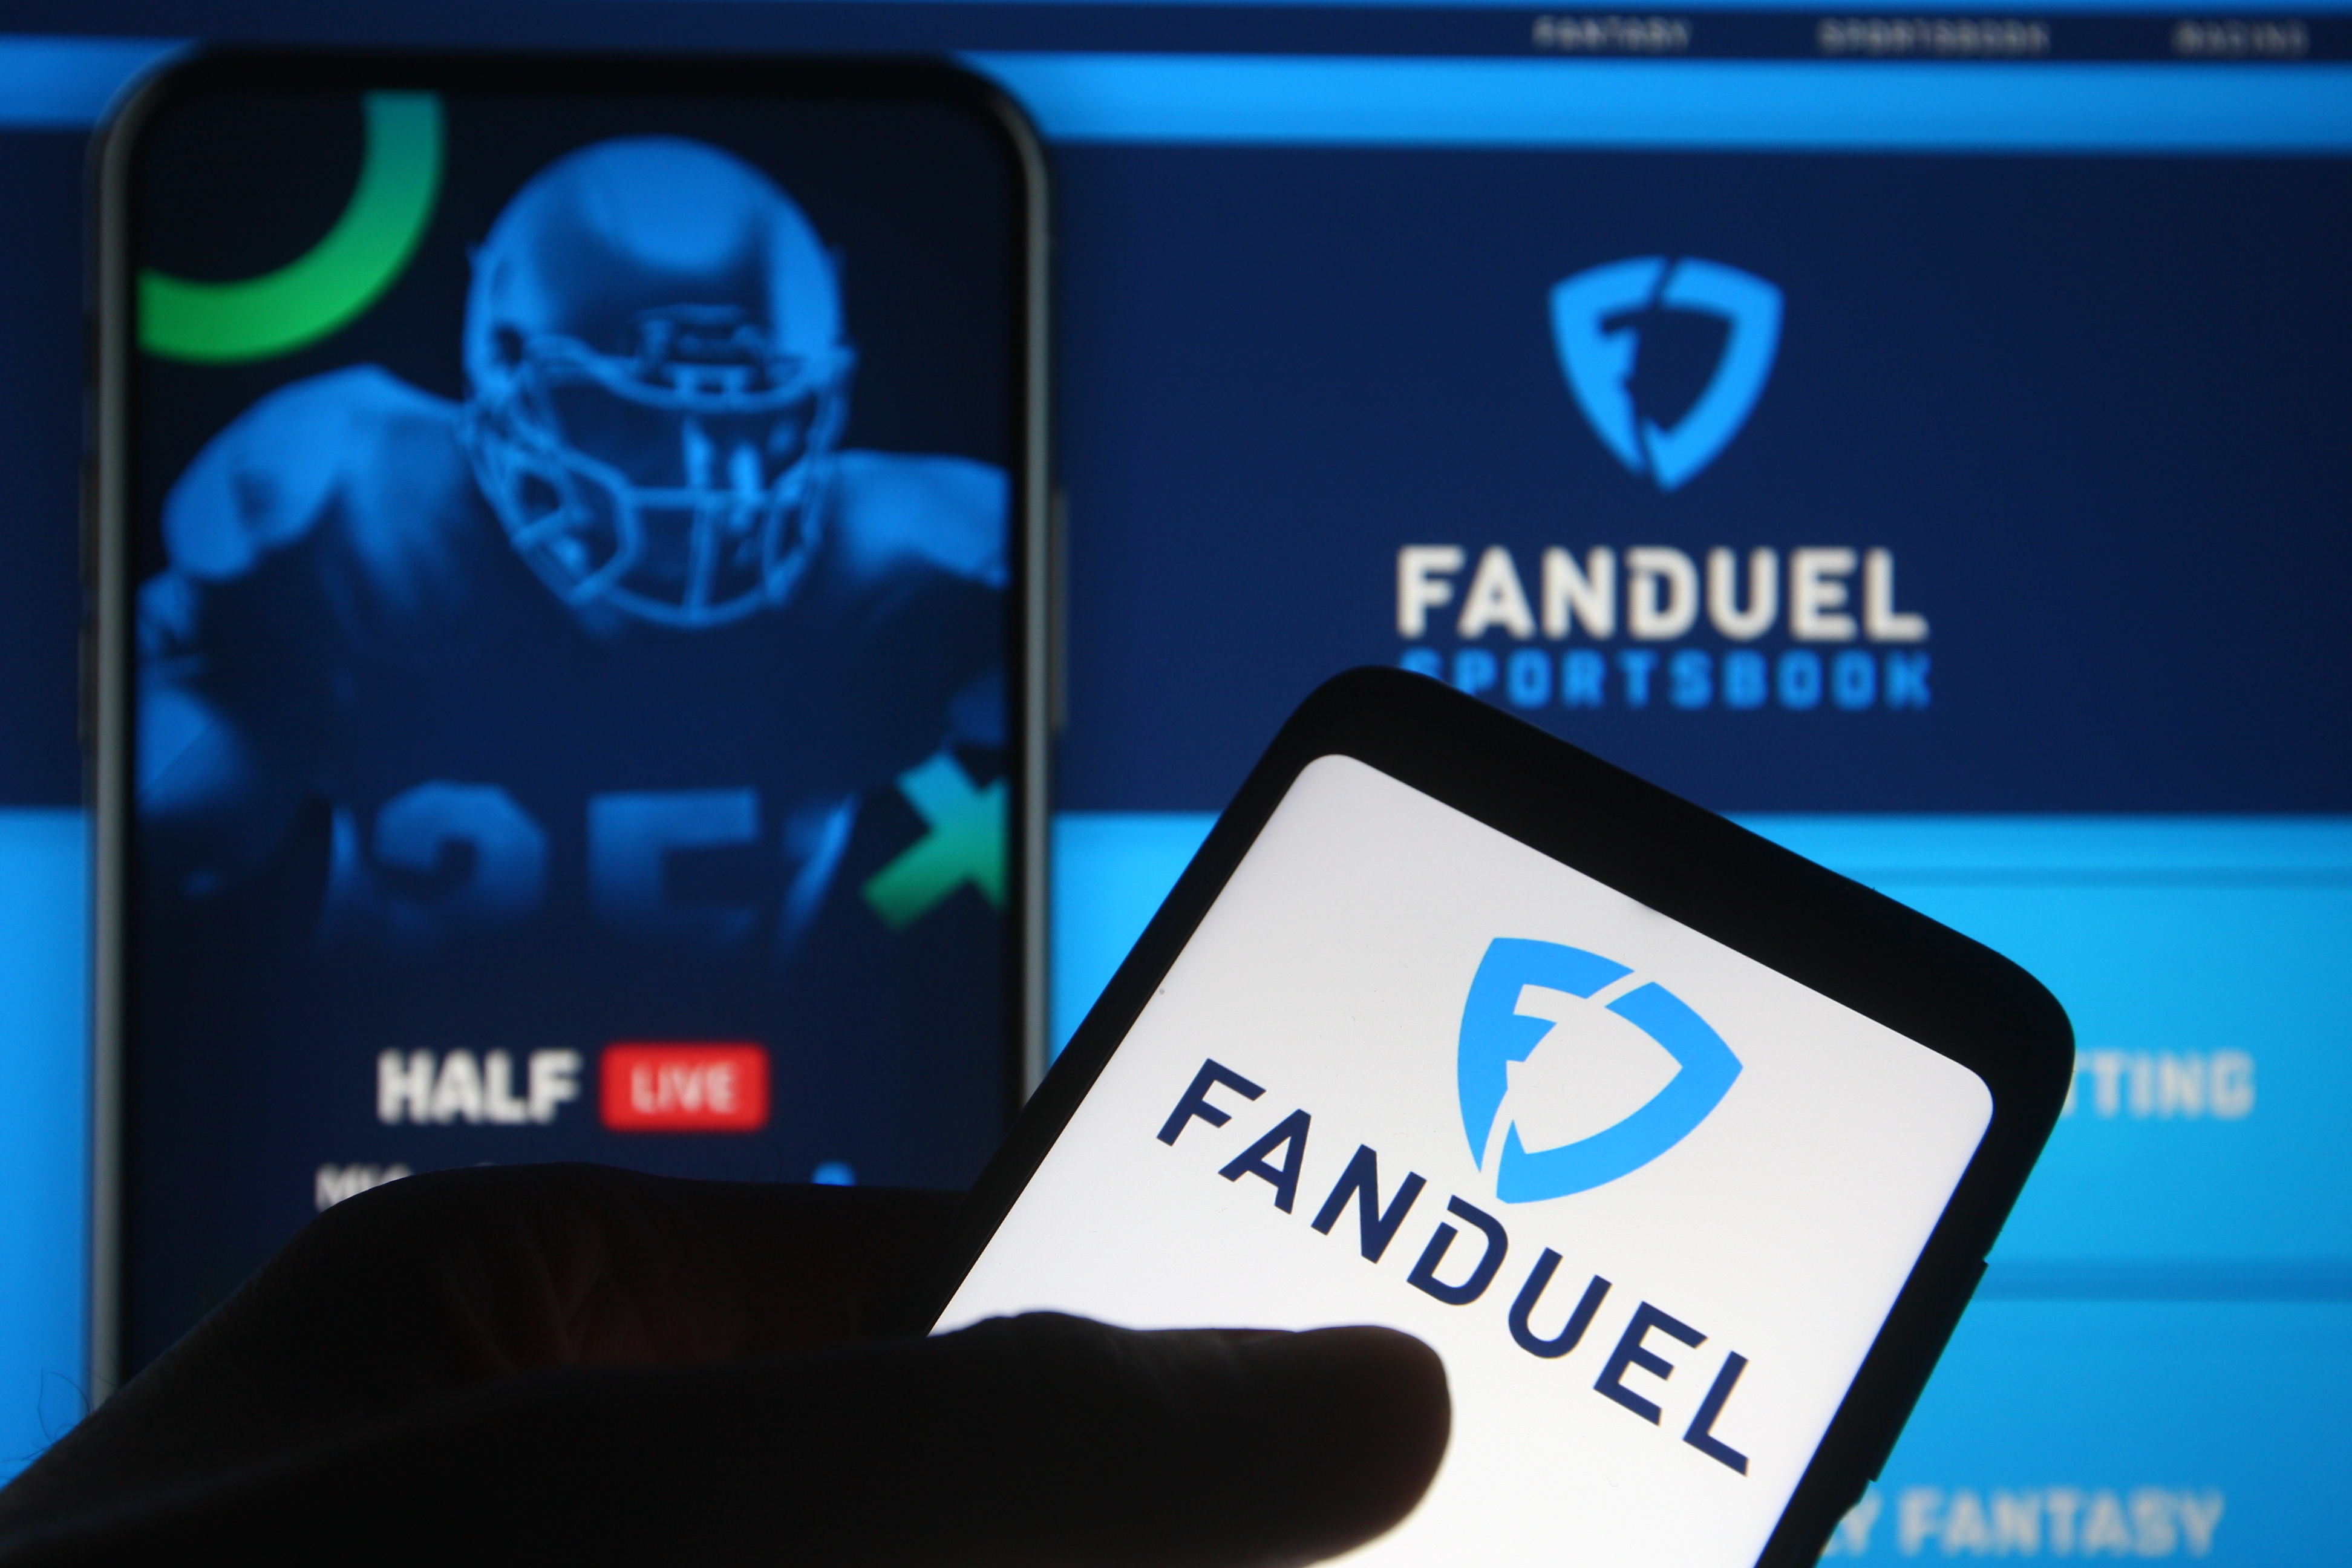 FanDuel Sportsbook Announces Pre-Live Promotion Ahead of Louisiana Launch